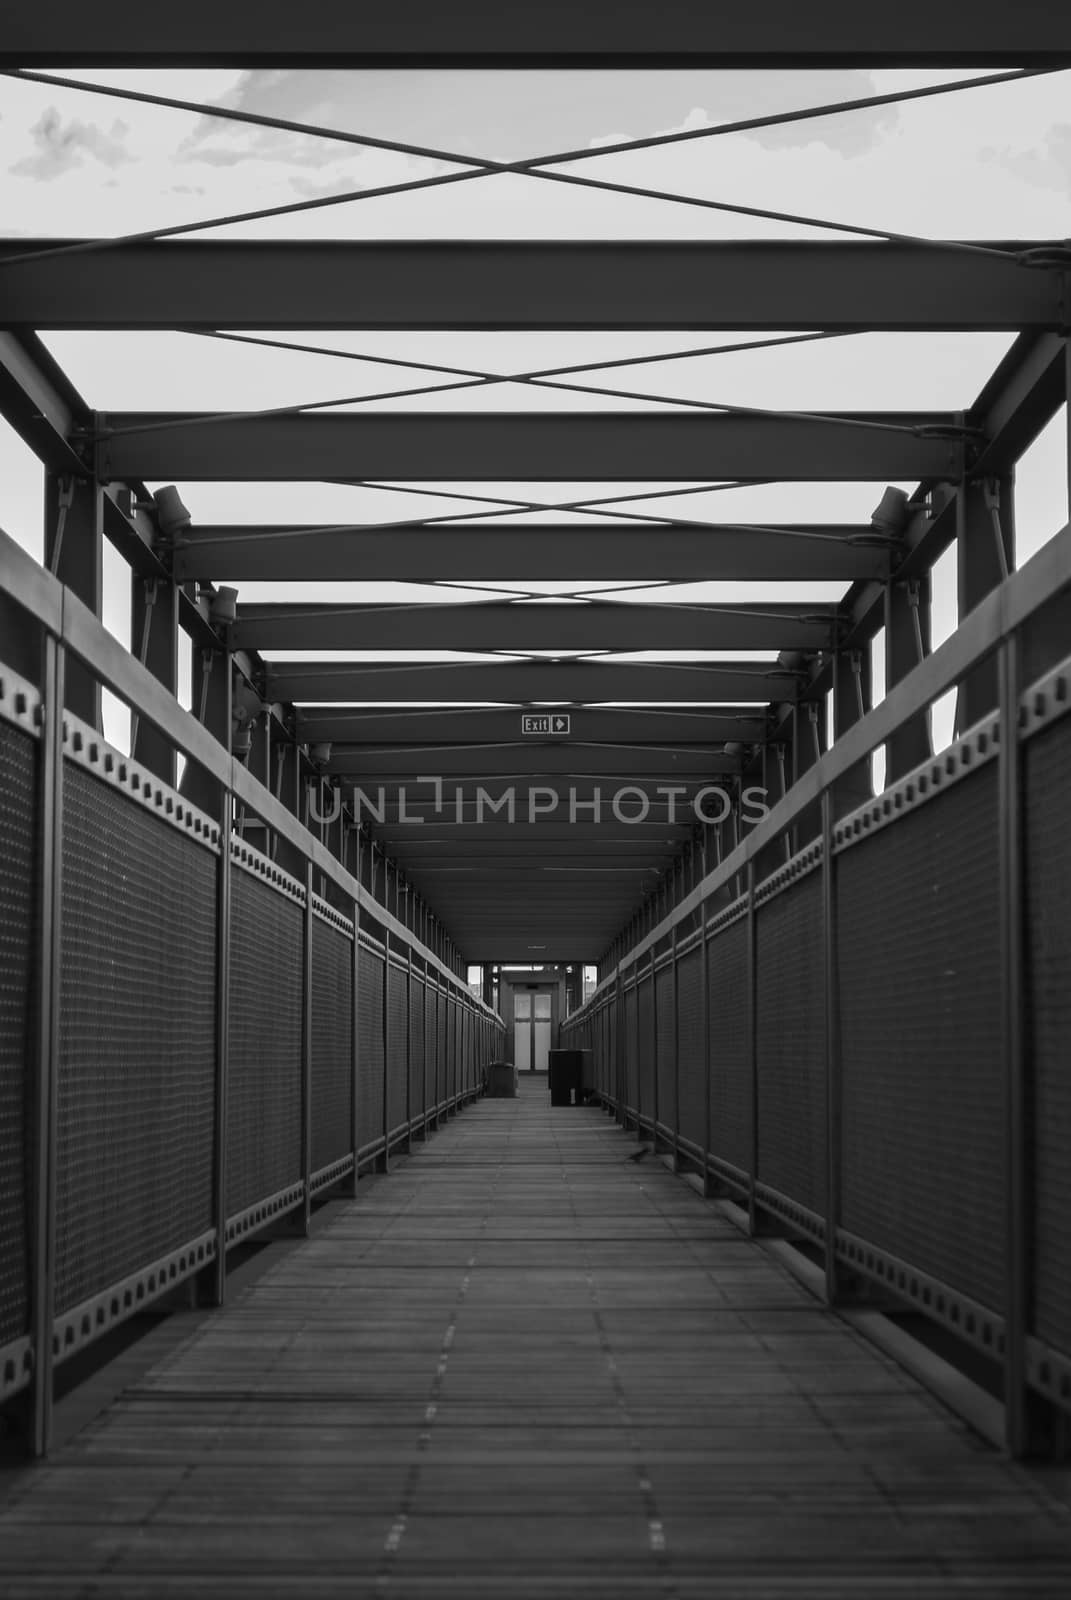 A black and white symmetrical walkway